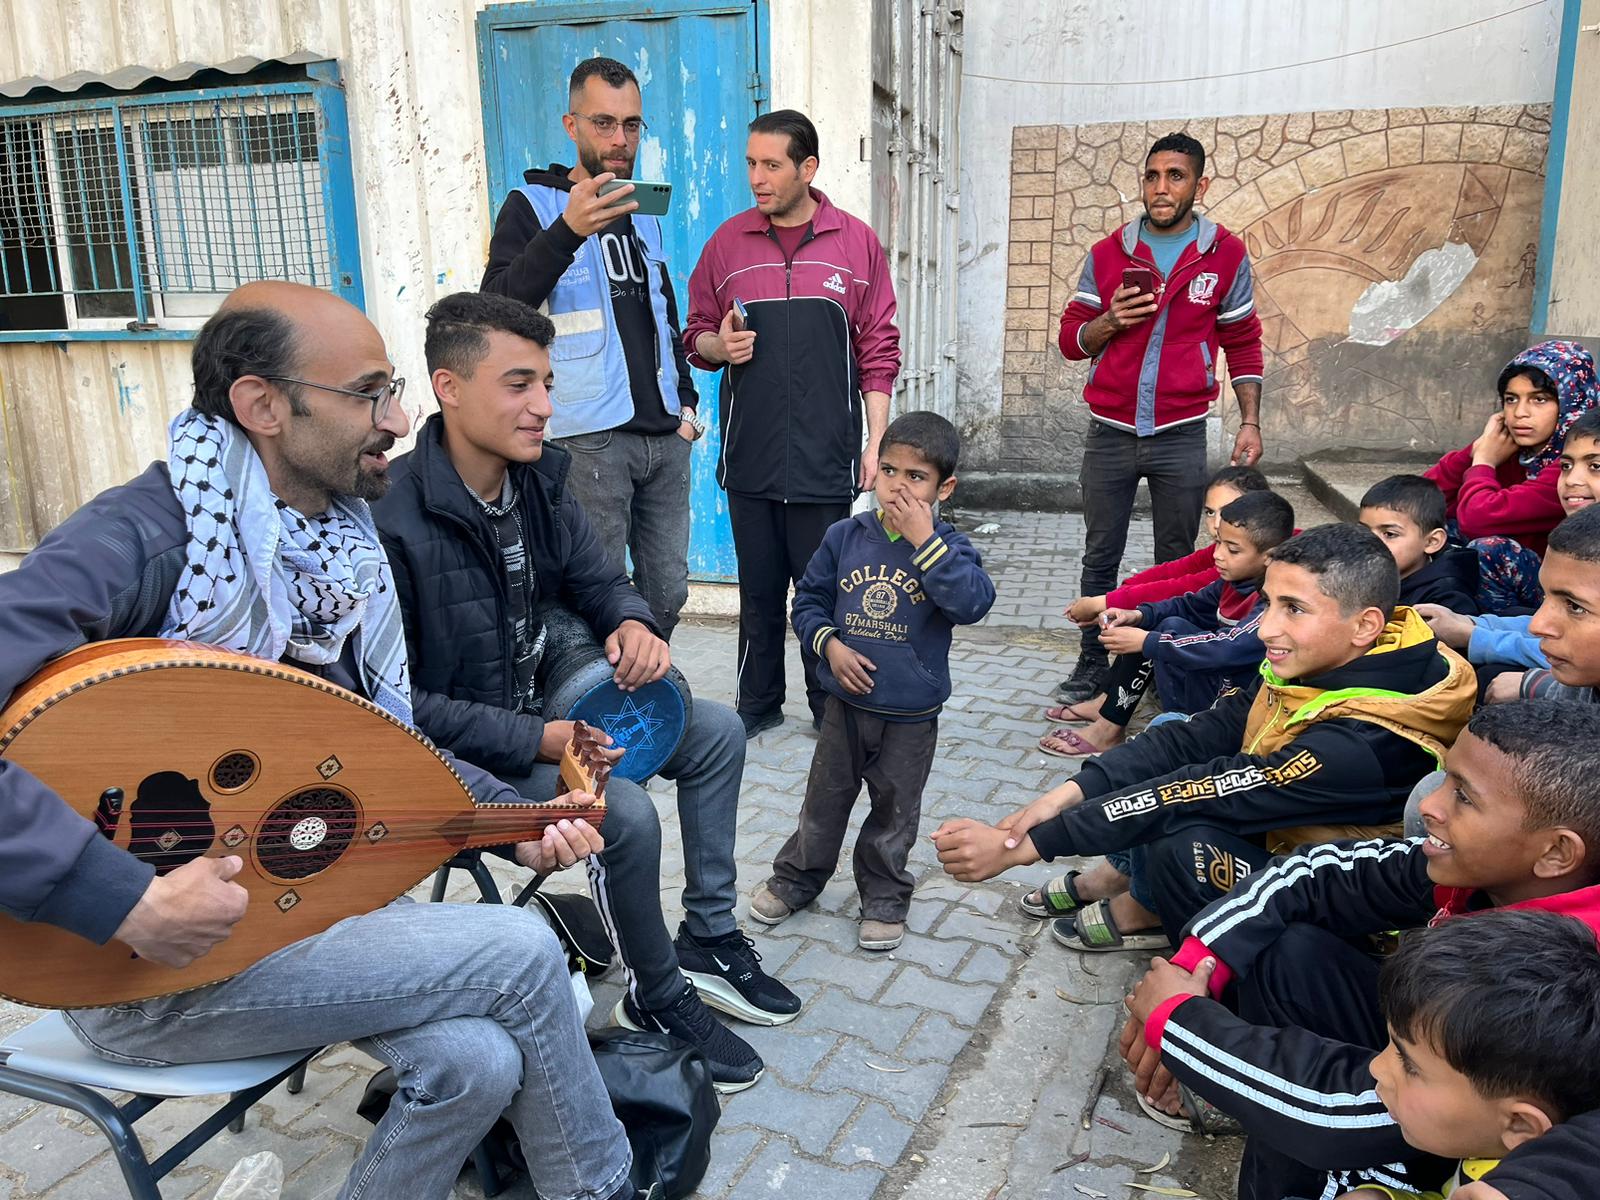 MUSIC BRINGS SMILES IN GAZA